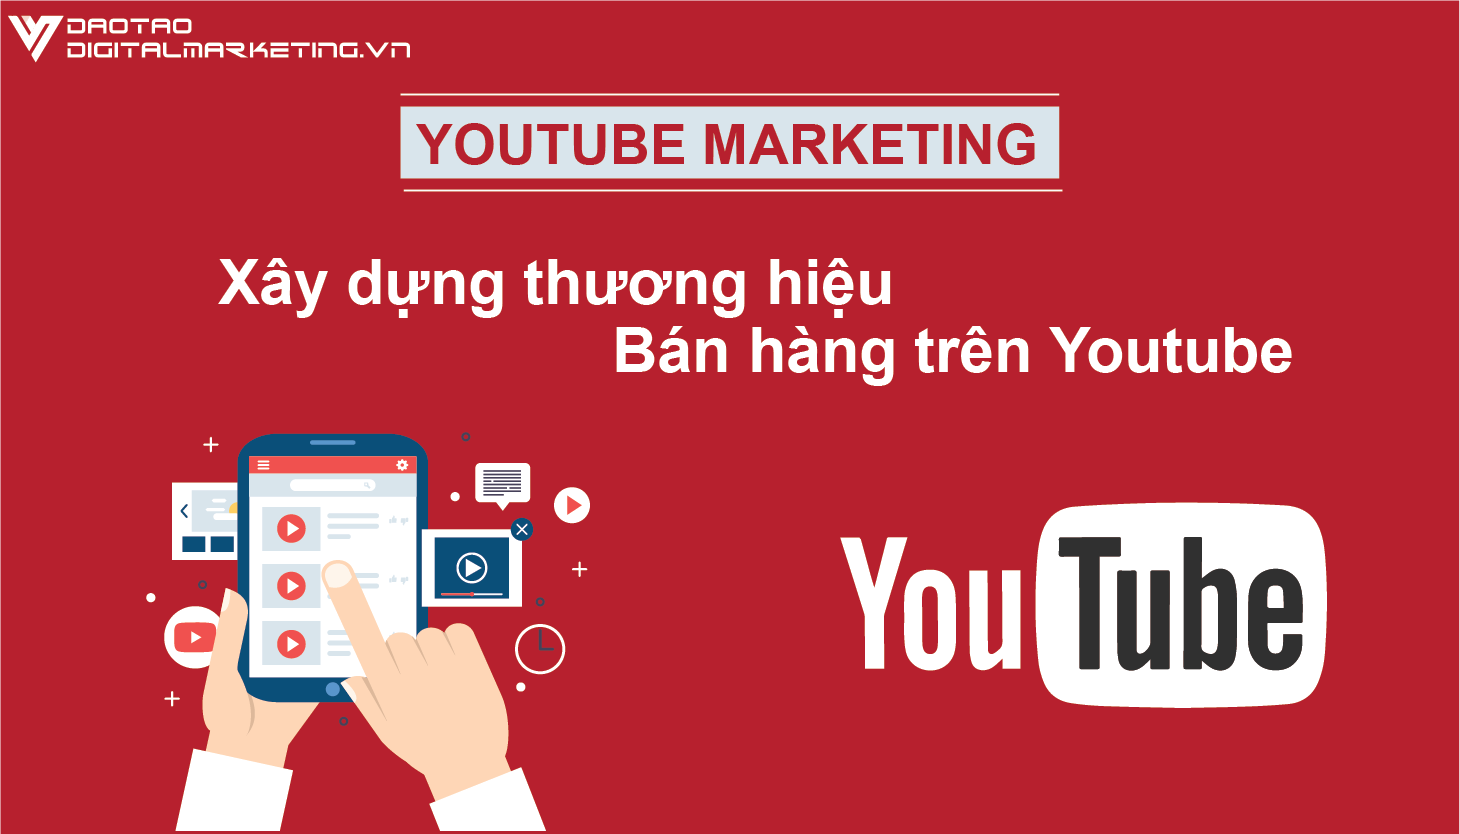 khoa-hoc-youtube-marketing-trung-tam-dao-tao-digital-marketing